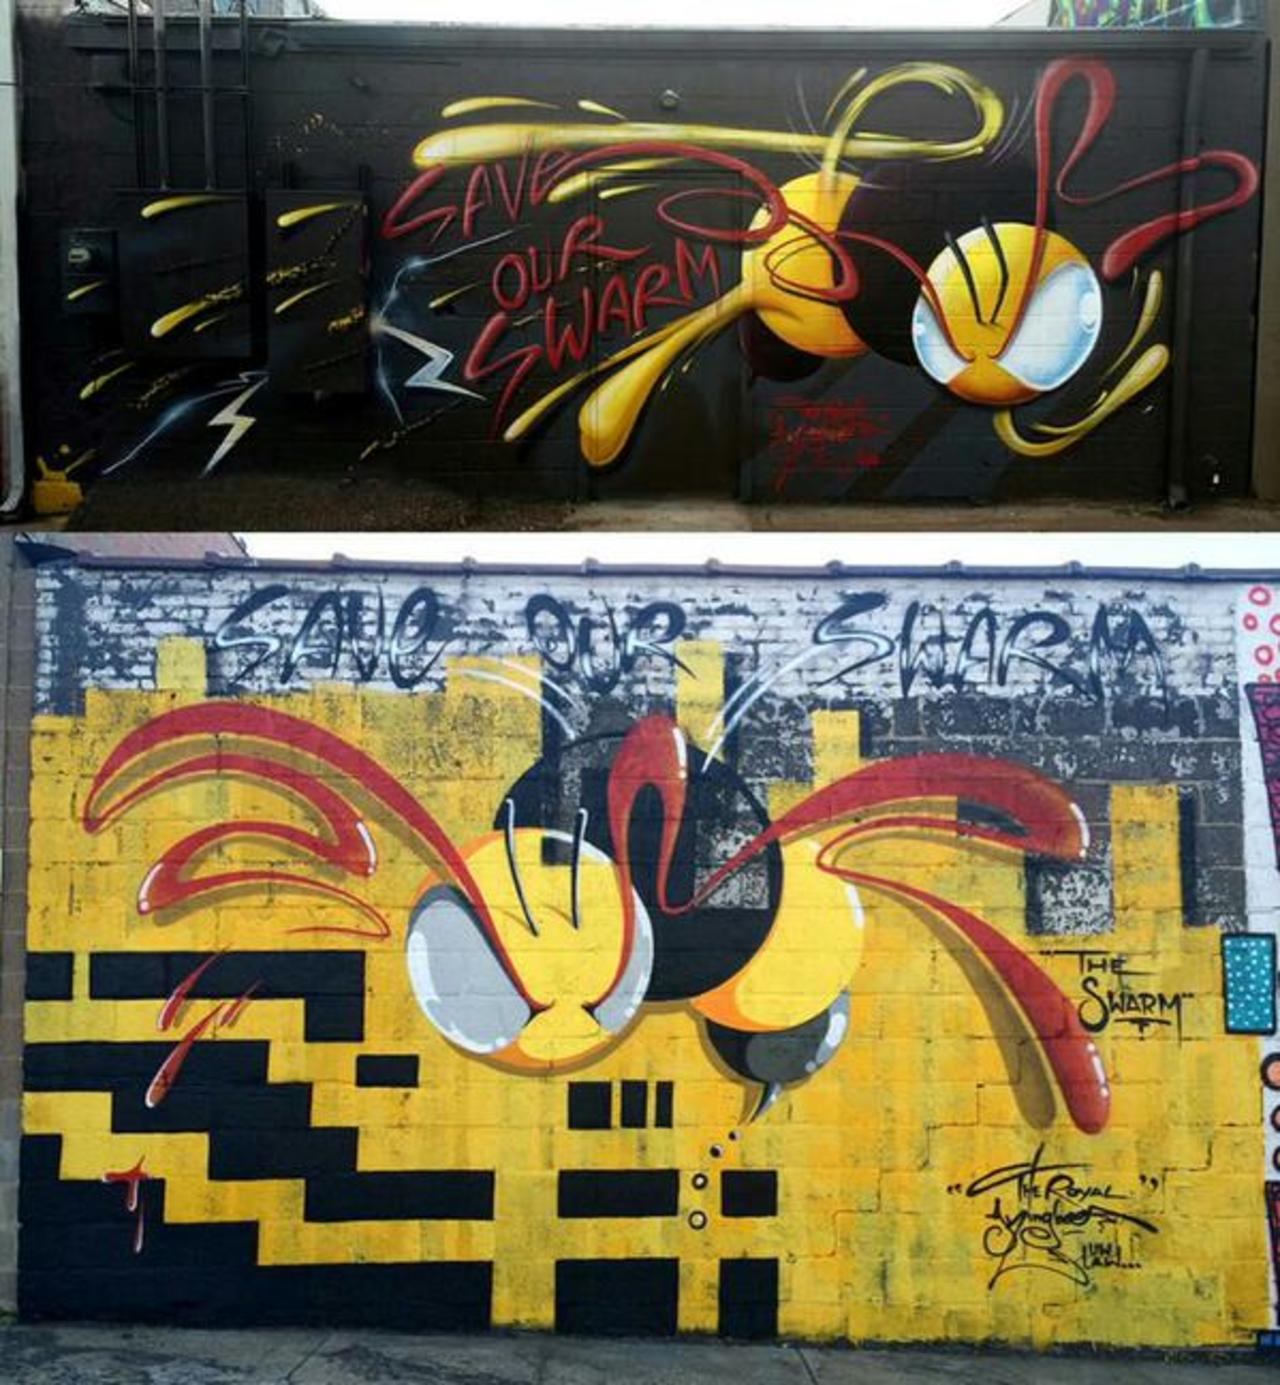 'Salva tu enjambre'
Artista: KingBeeUW 
Nueva York
#art #streetart #mural #graffiti http://t.co/wPWTACqEJ7